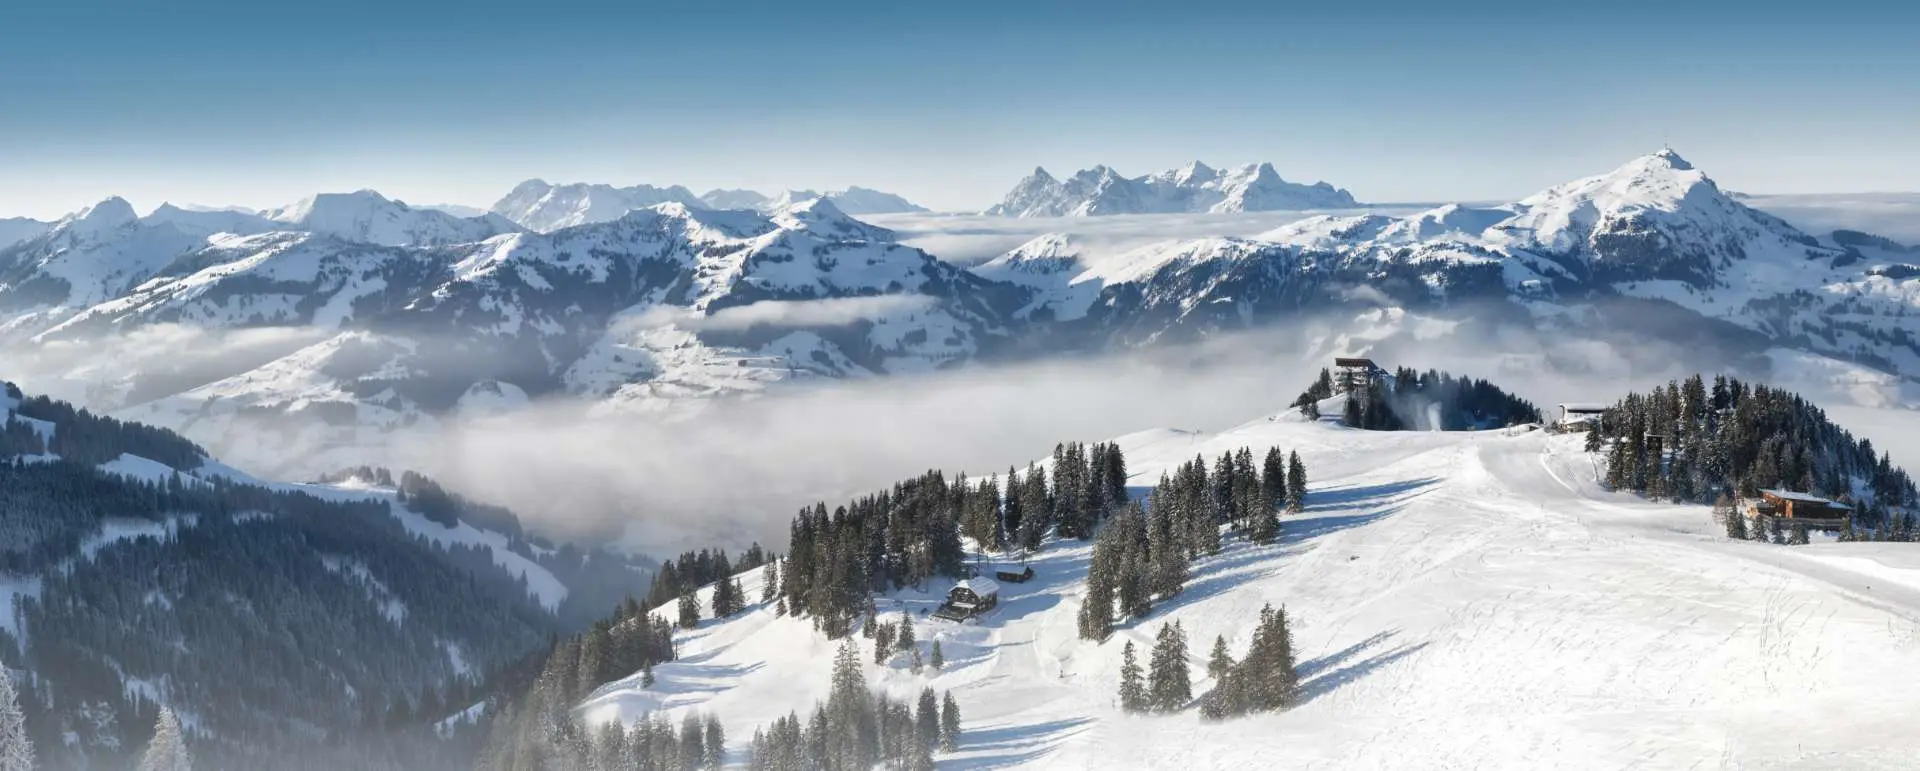 Kitzbühel Alps - the destination for hikers